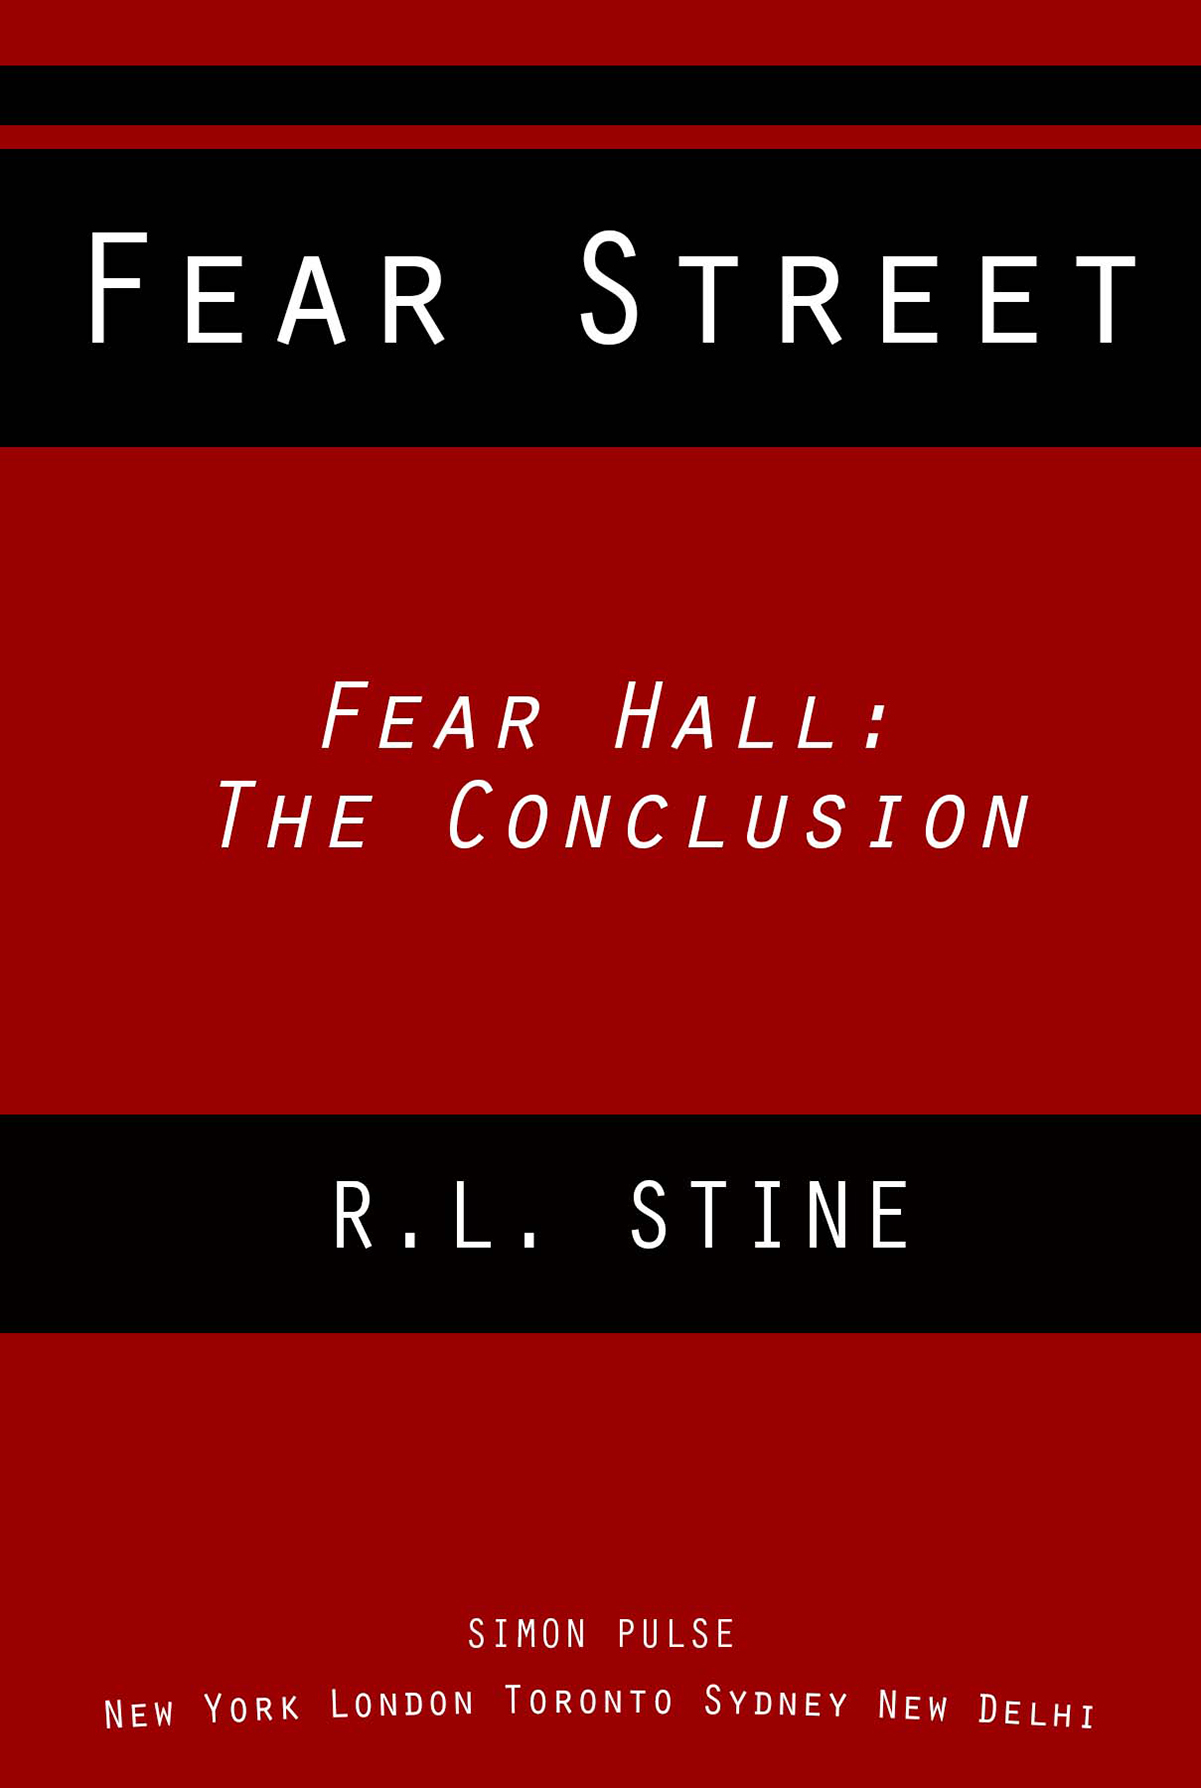 The Conclusion by R.L. Stine